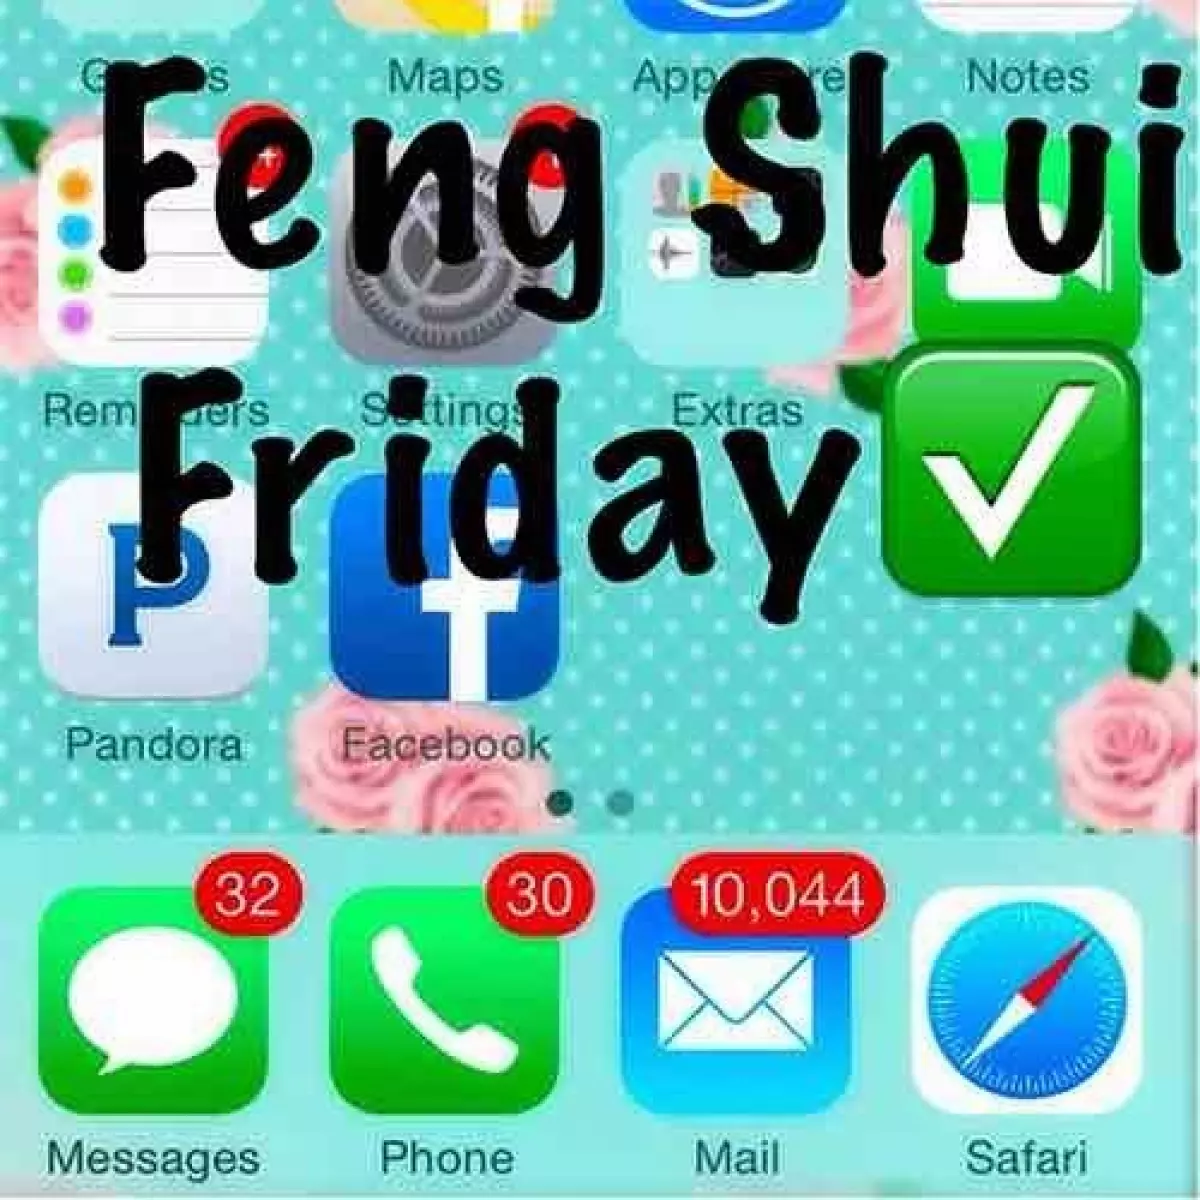 Feng shui your smartphone!